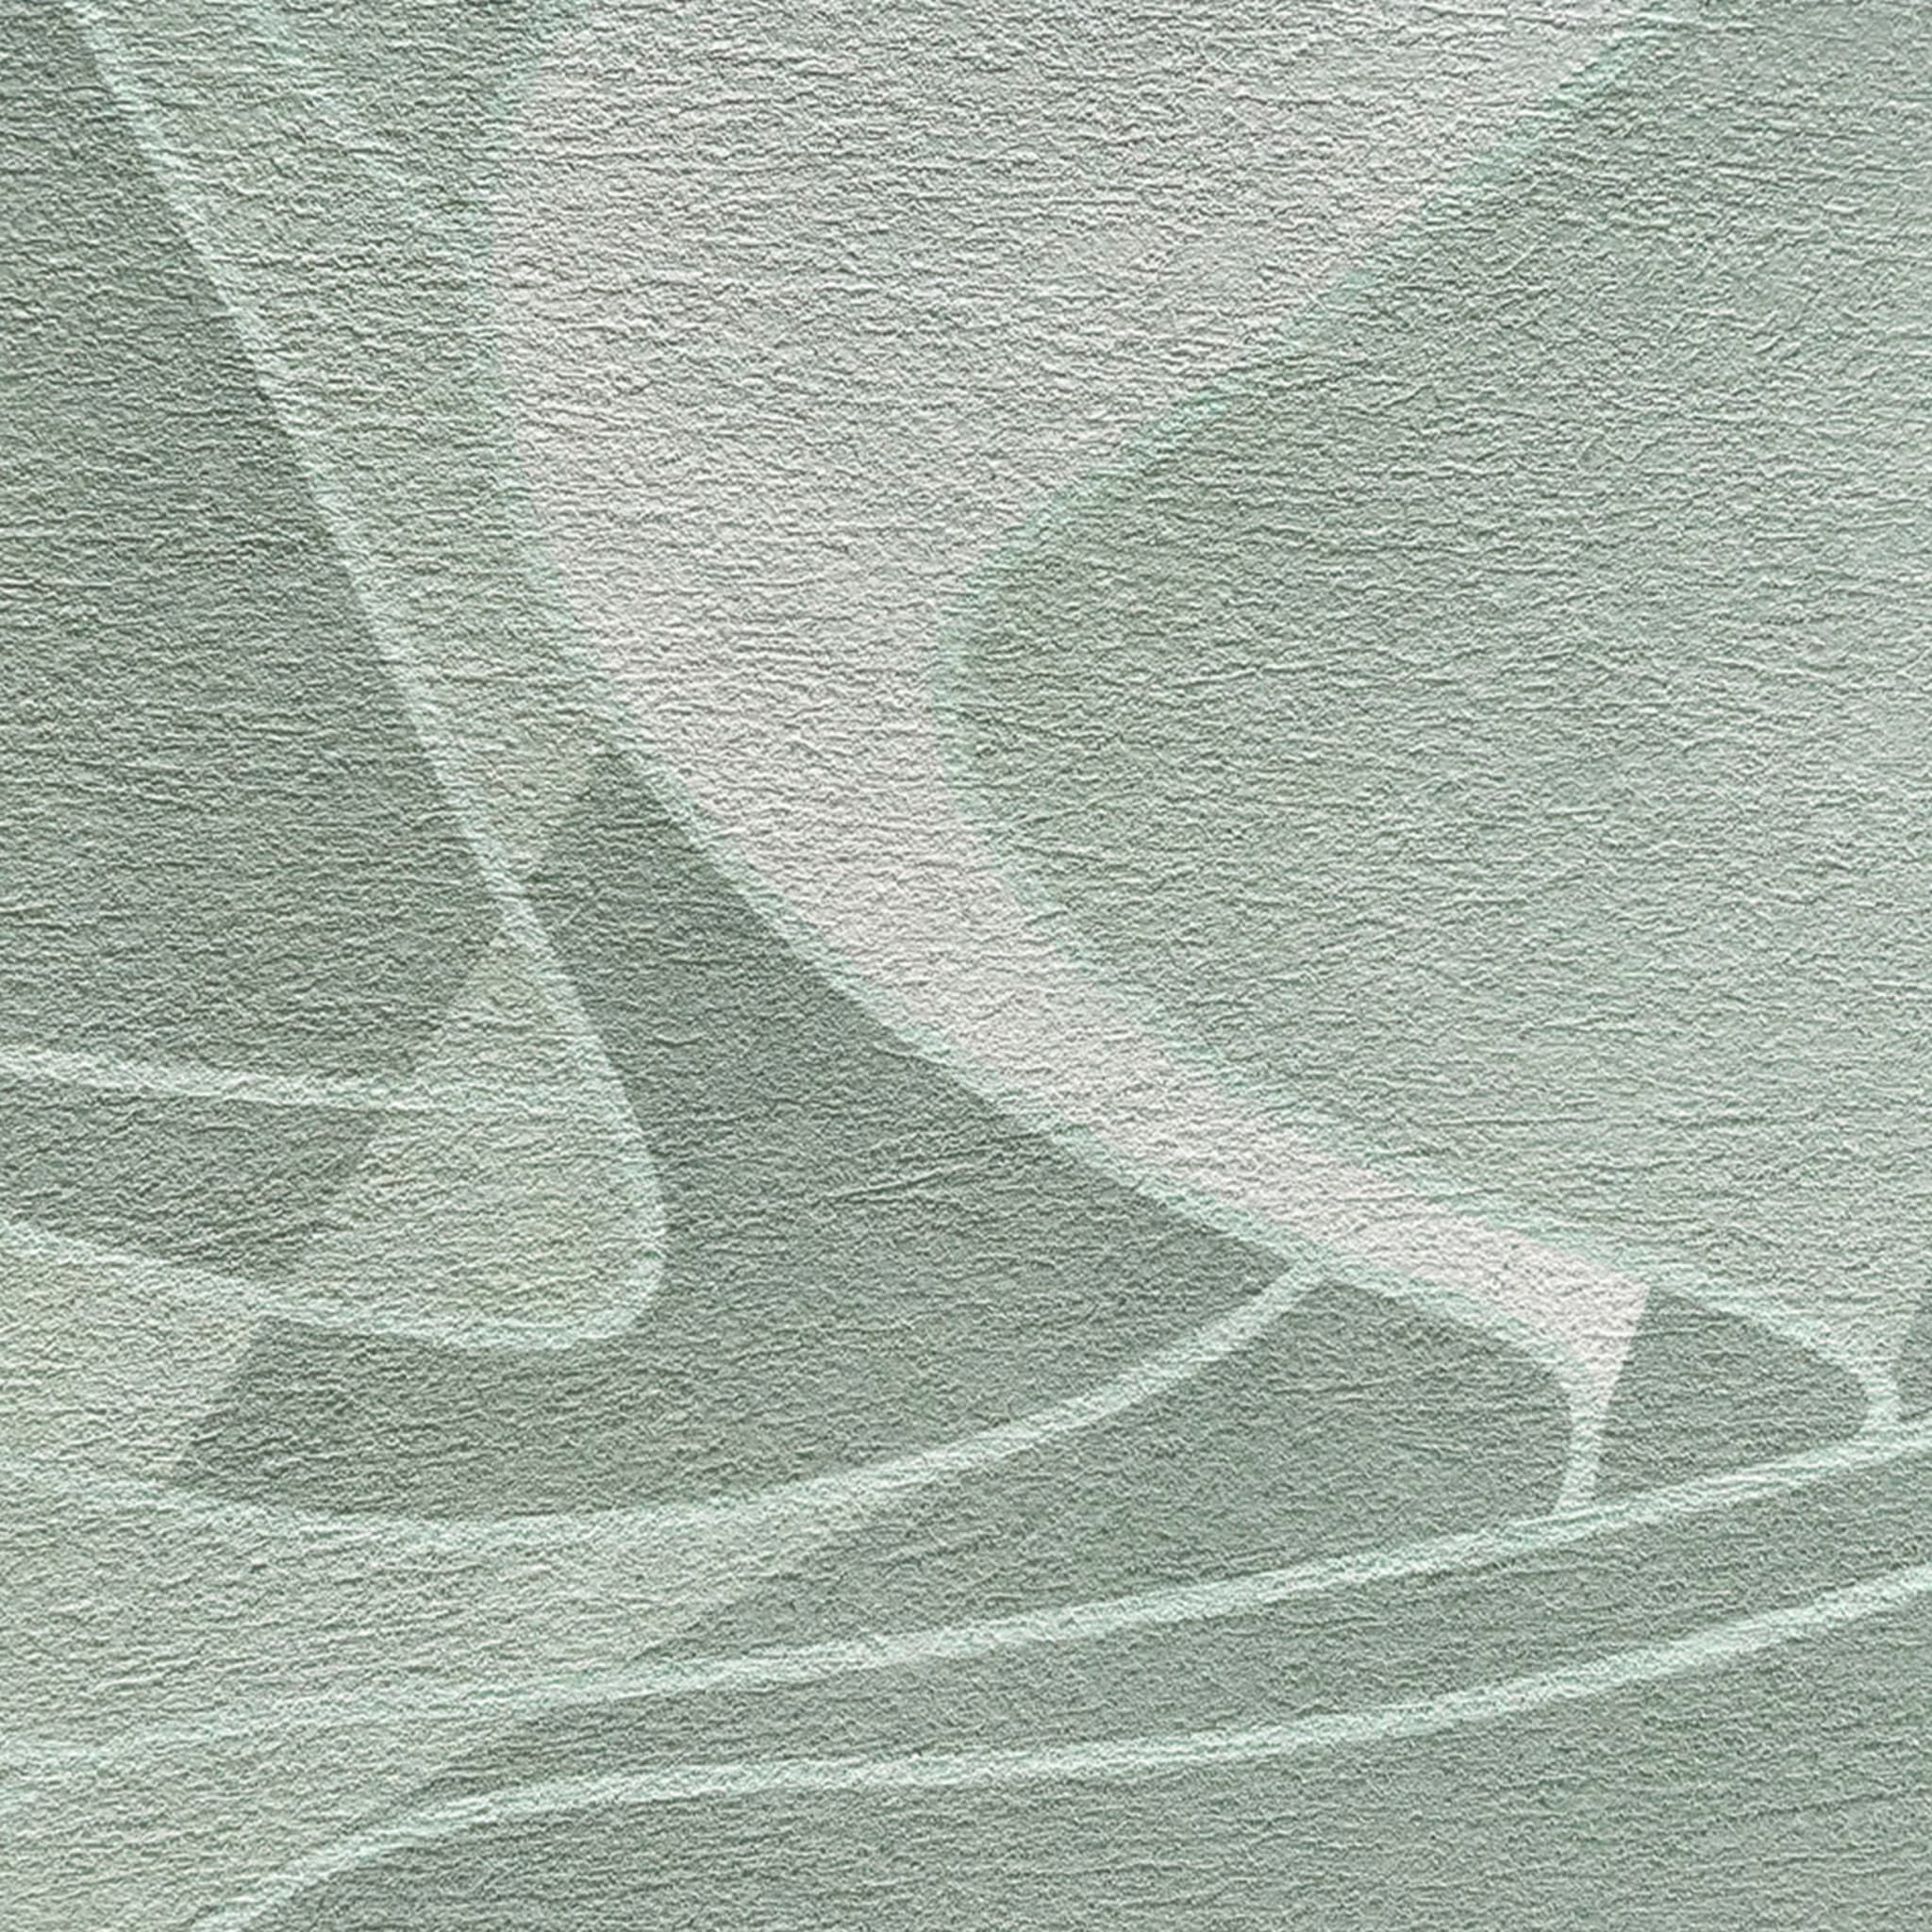 Green Soft Motion textured wallpaper - Alternative view 1